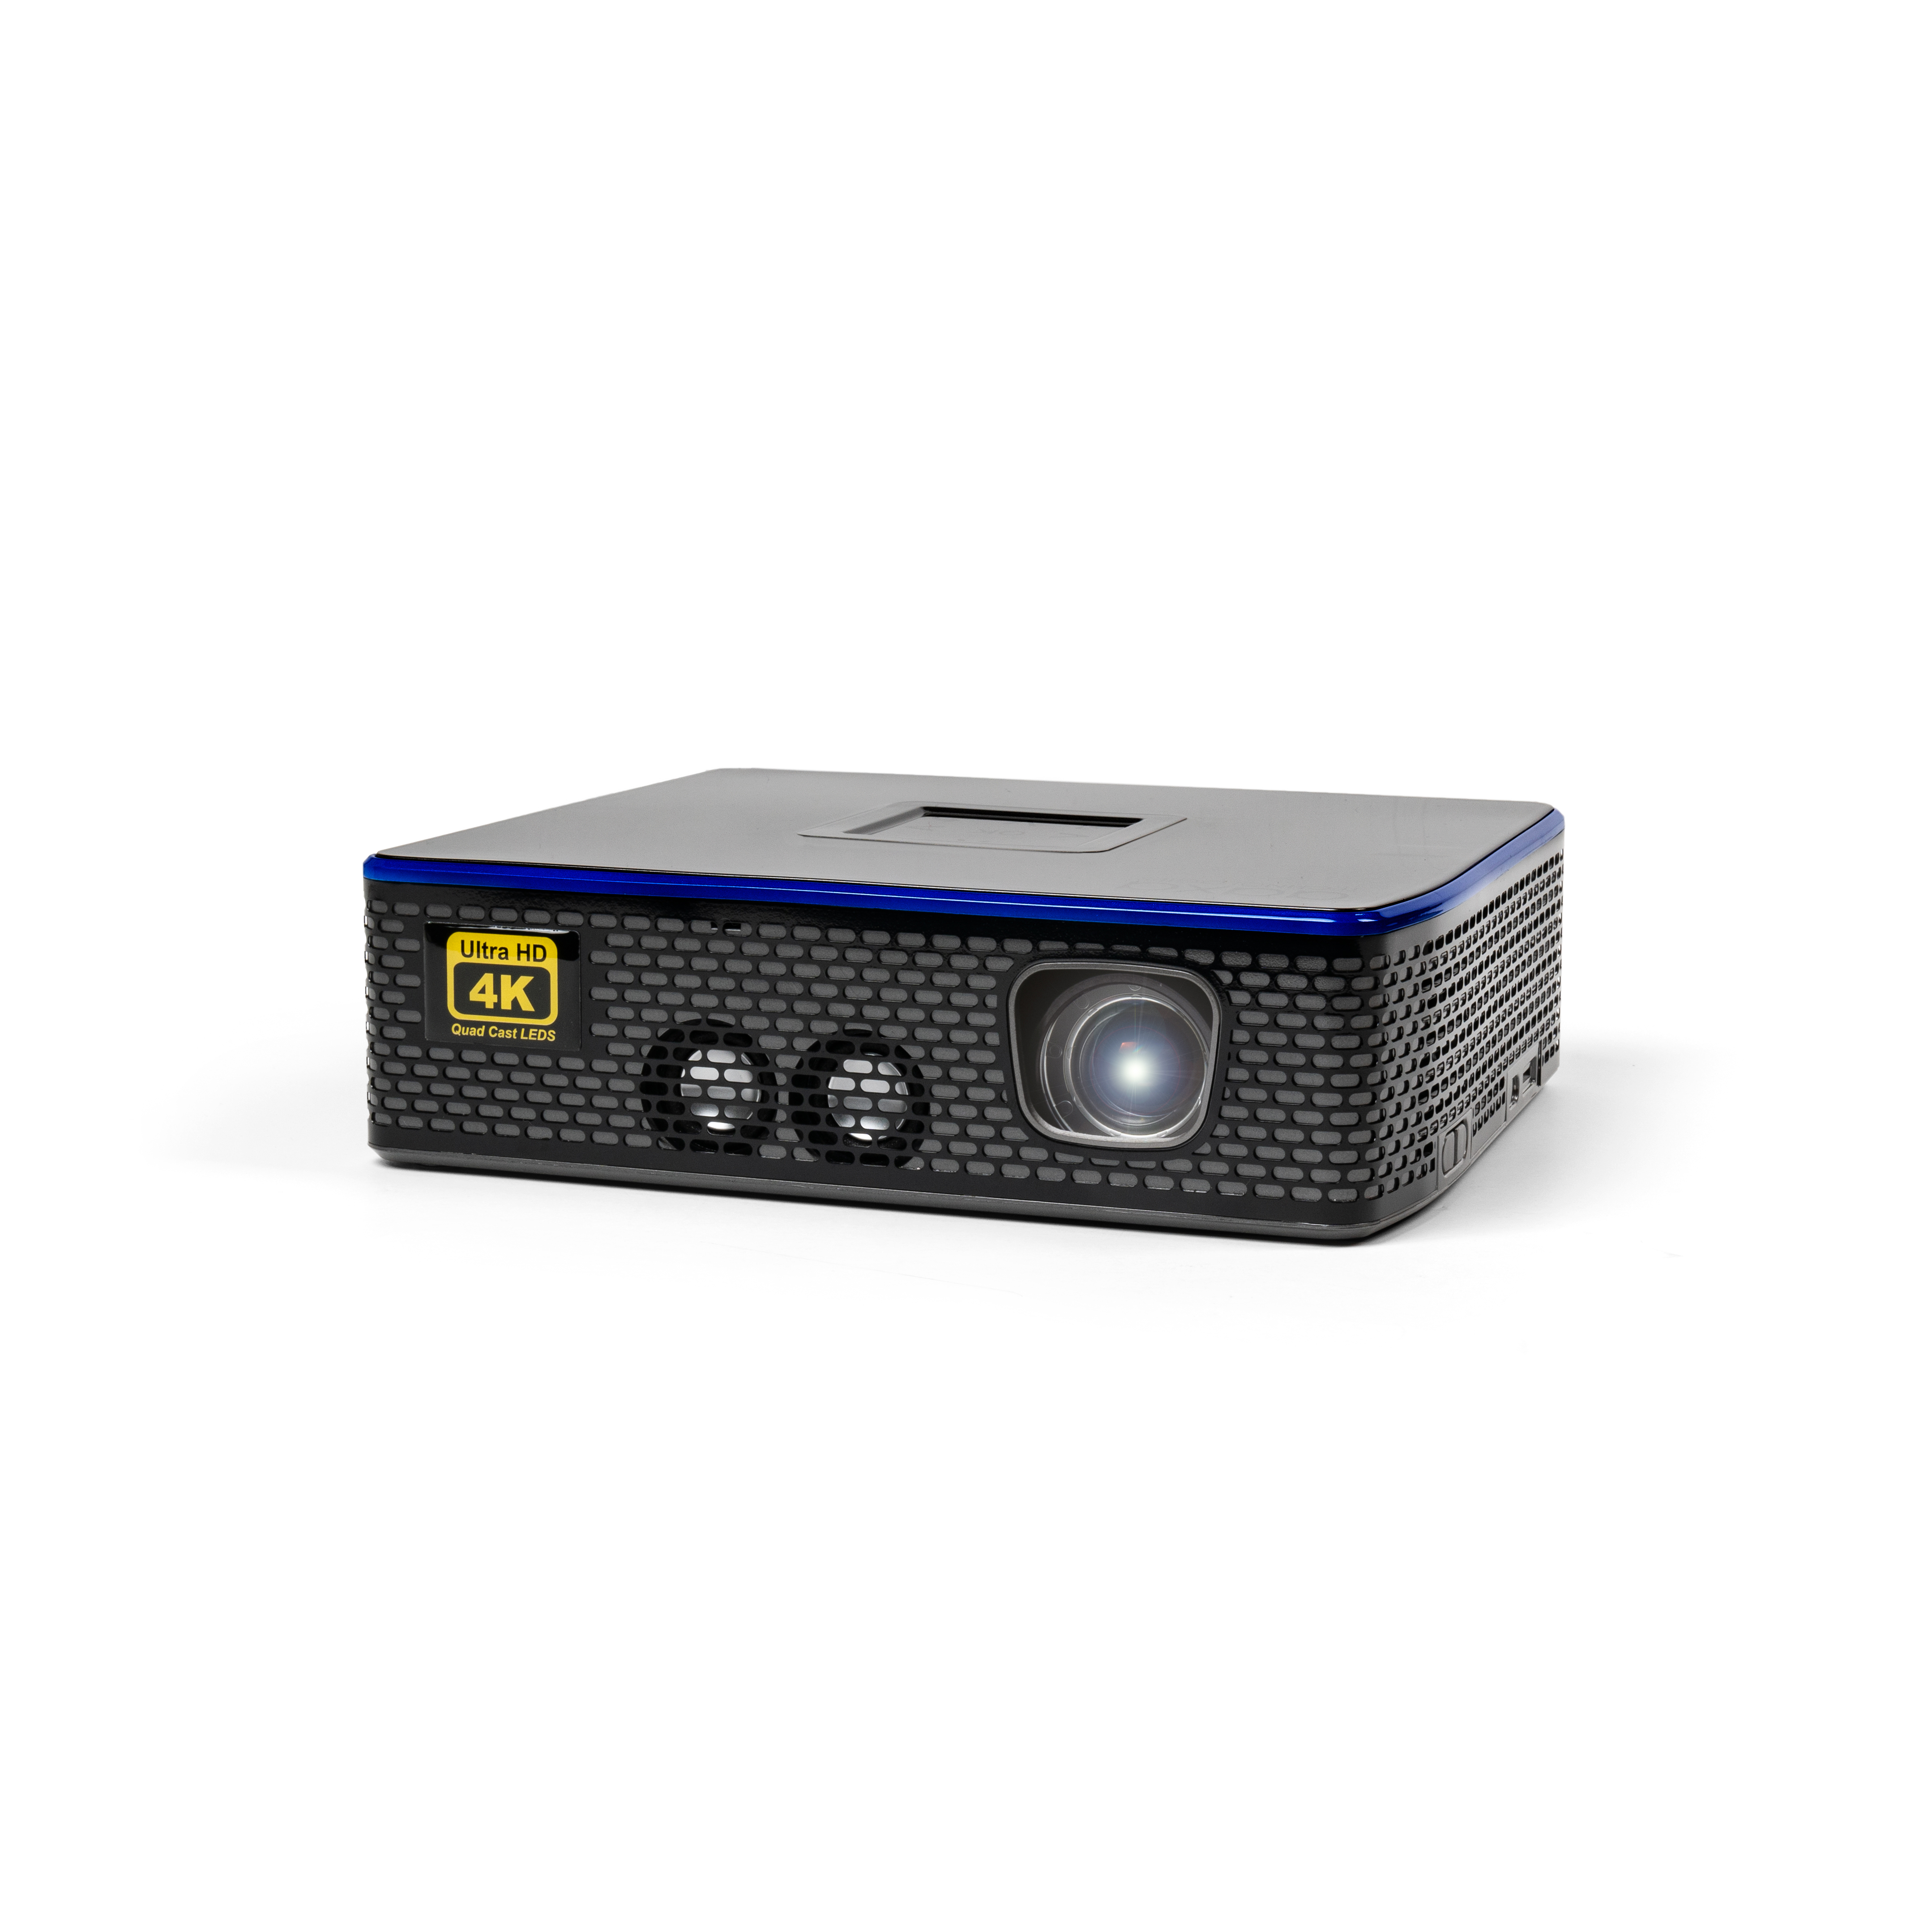 Aaxa Technologies Introduces The 4k1 A True Native 4k Uhd Mini Led Projector